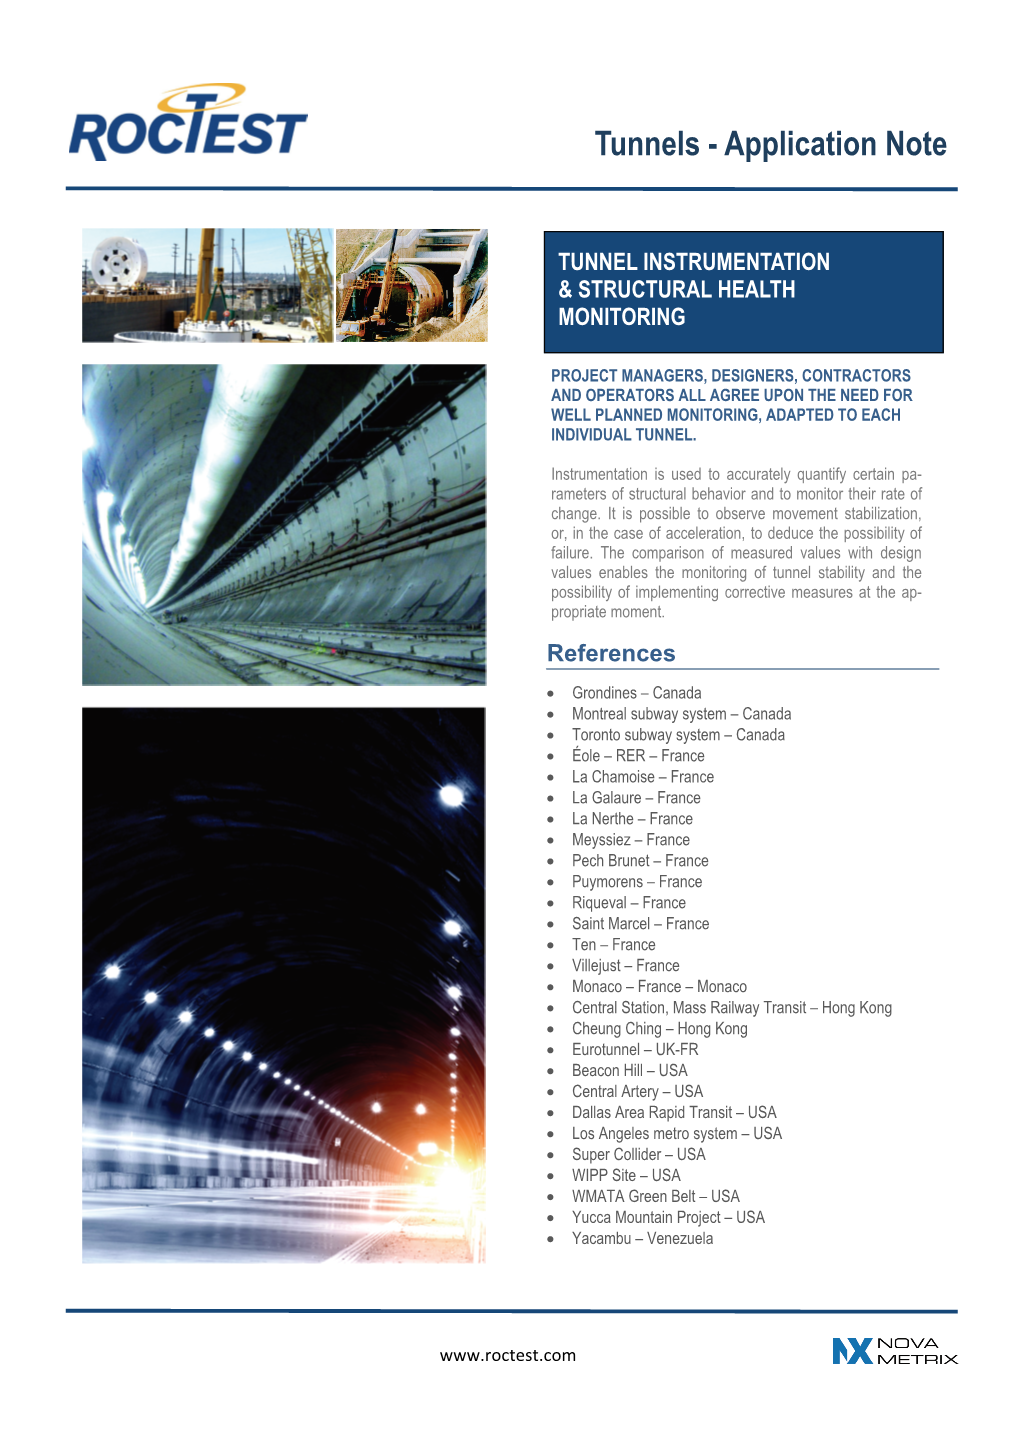 Tunnel Instrumentation & Structural Health Monitoring